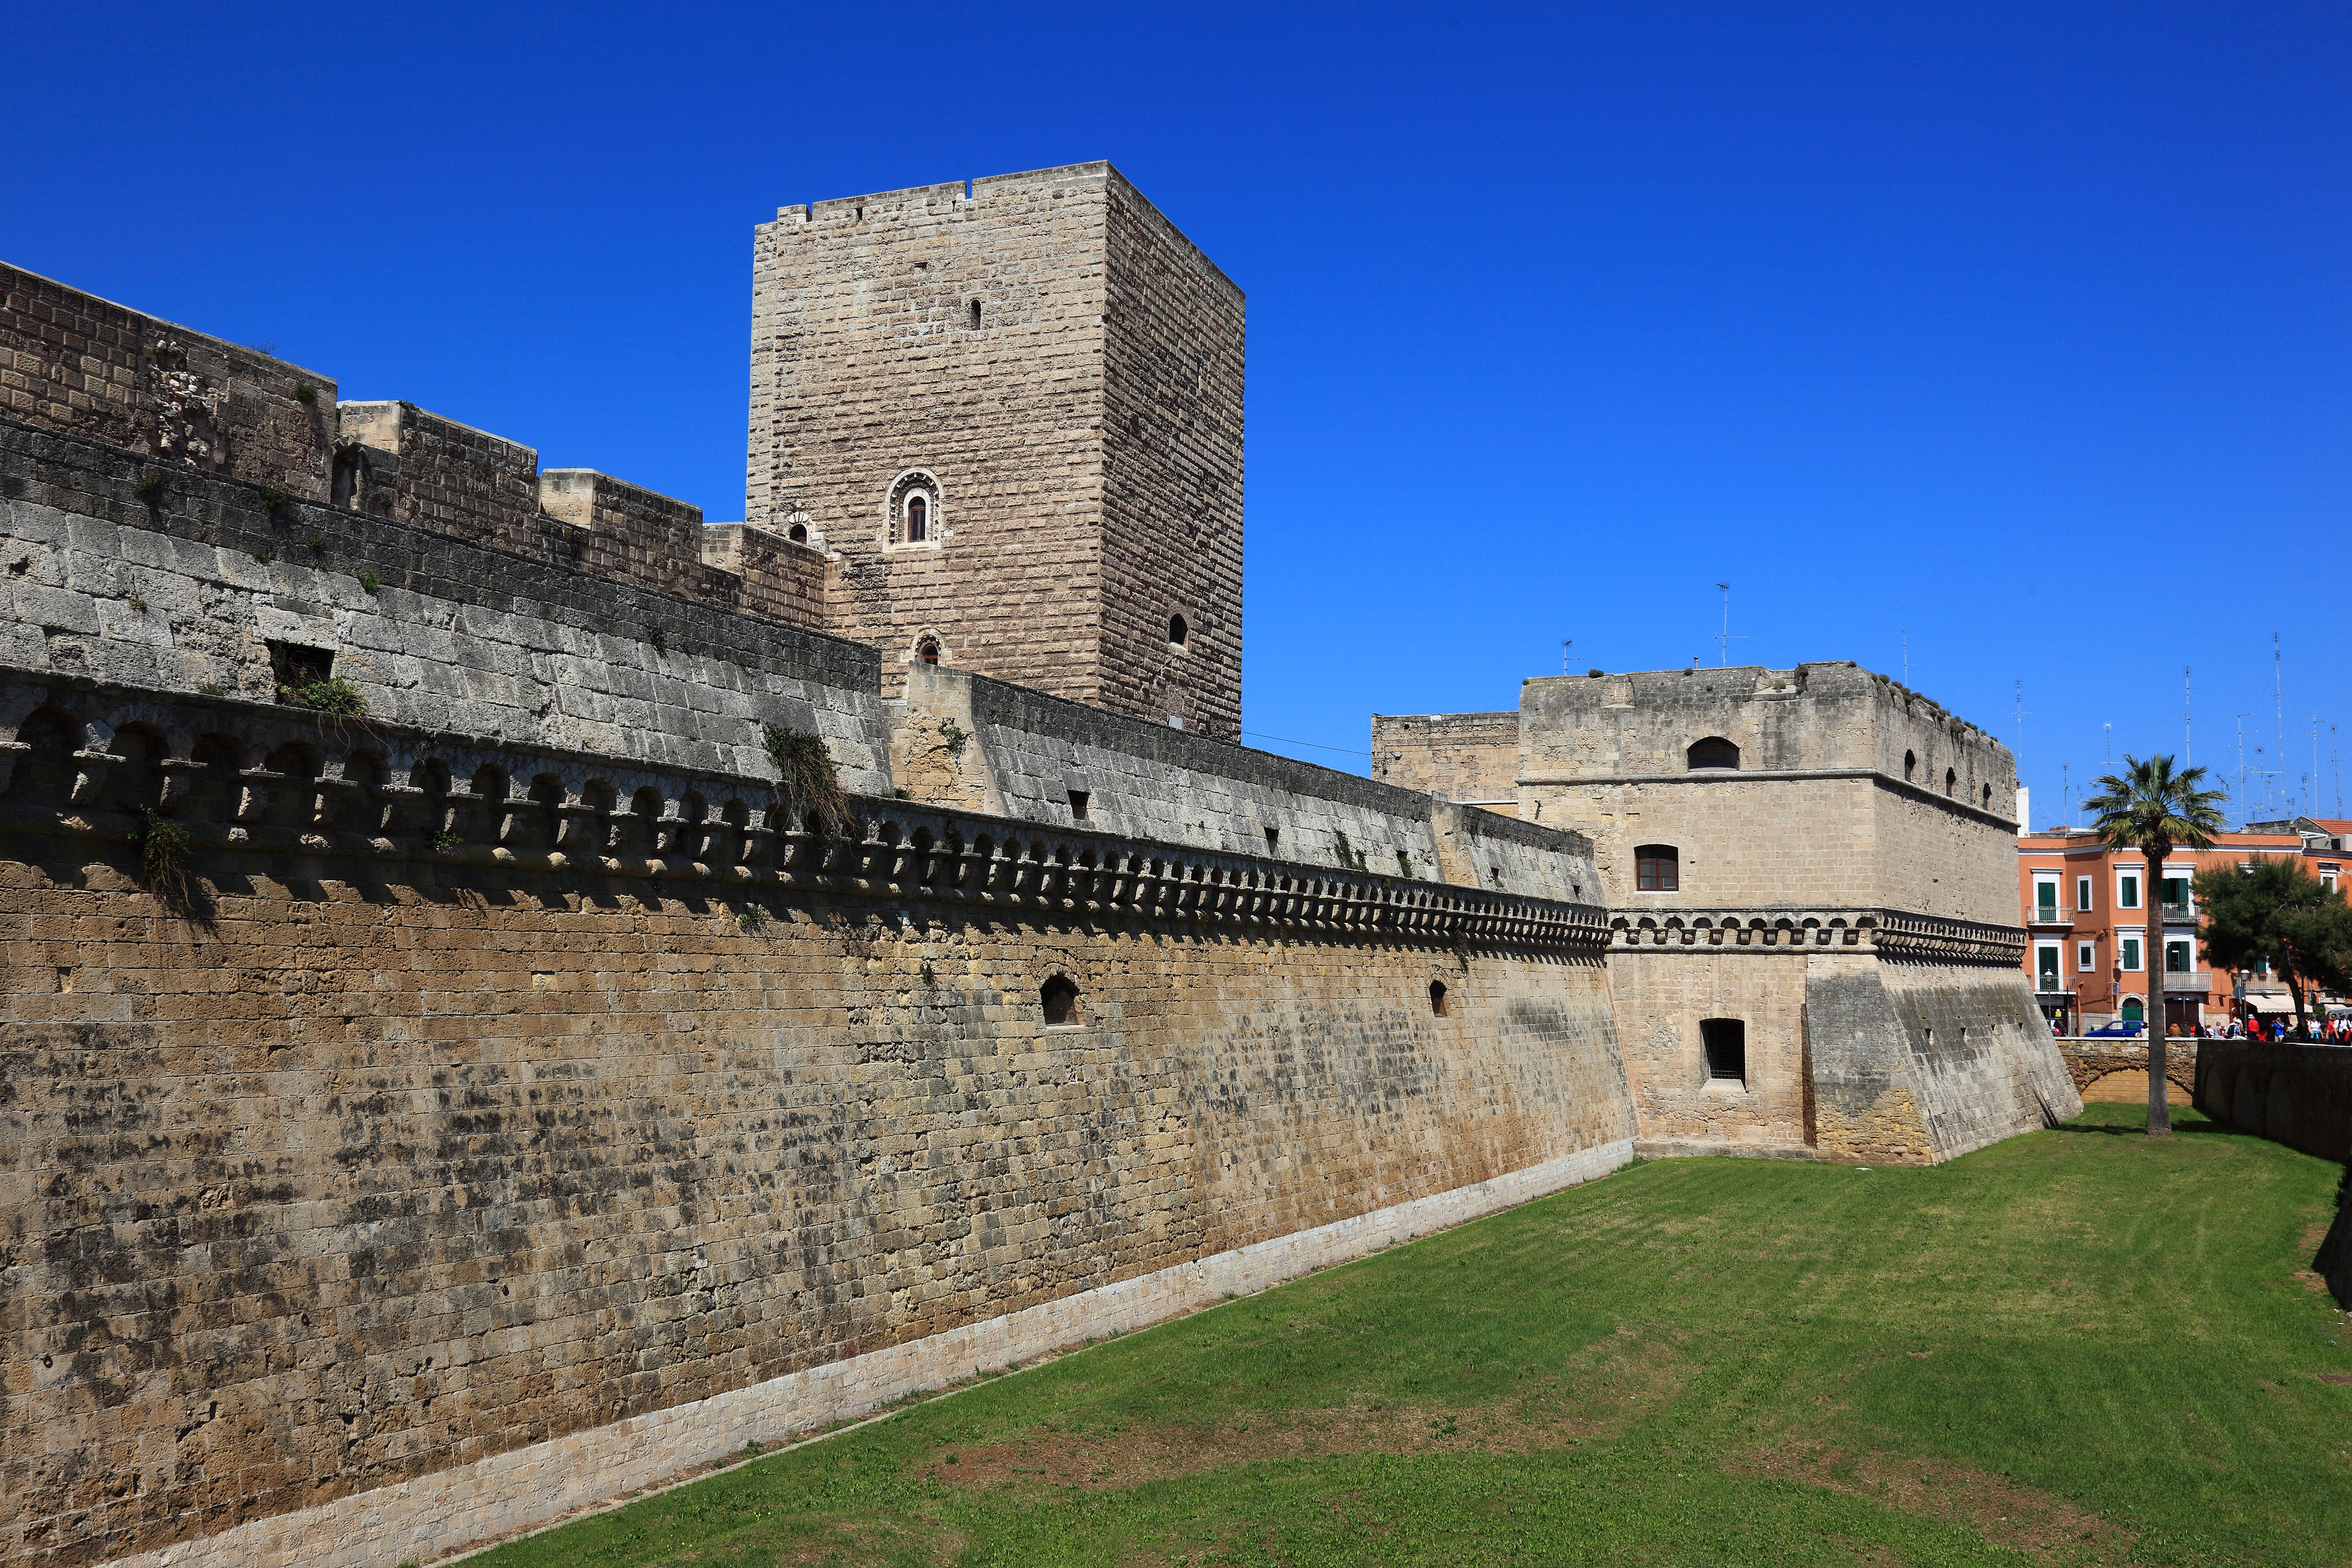 Castello Svevo | Bari, Italy Attractions - Lonely Planet